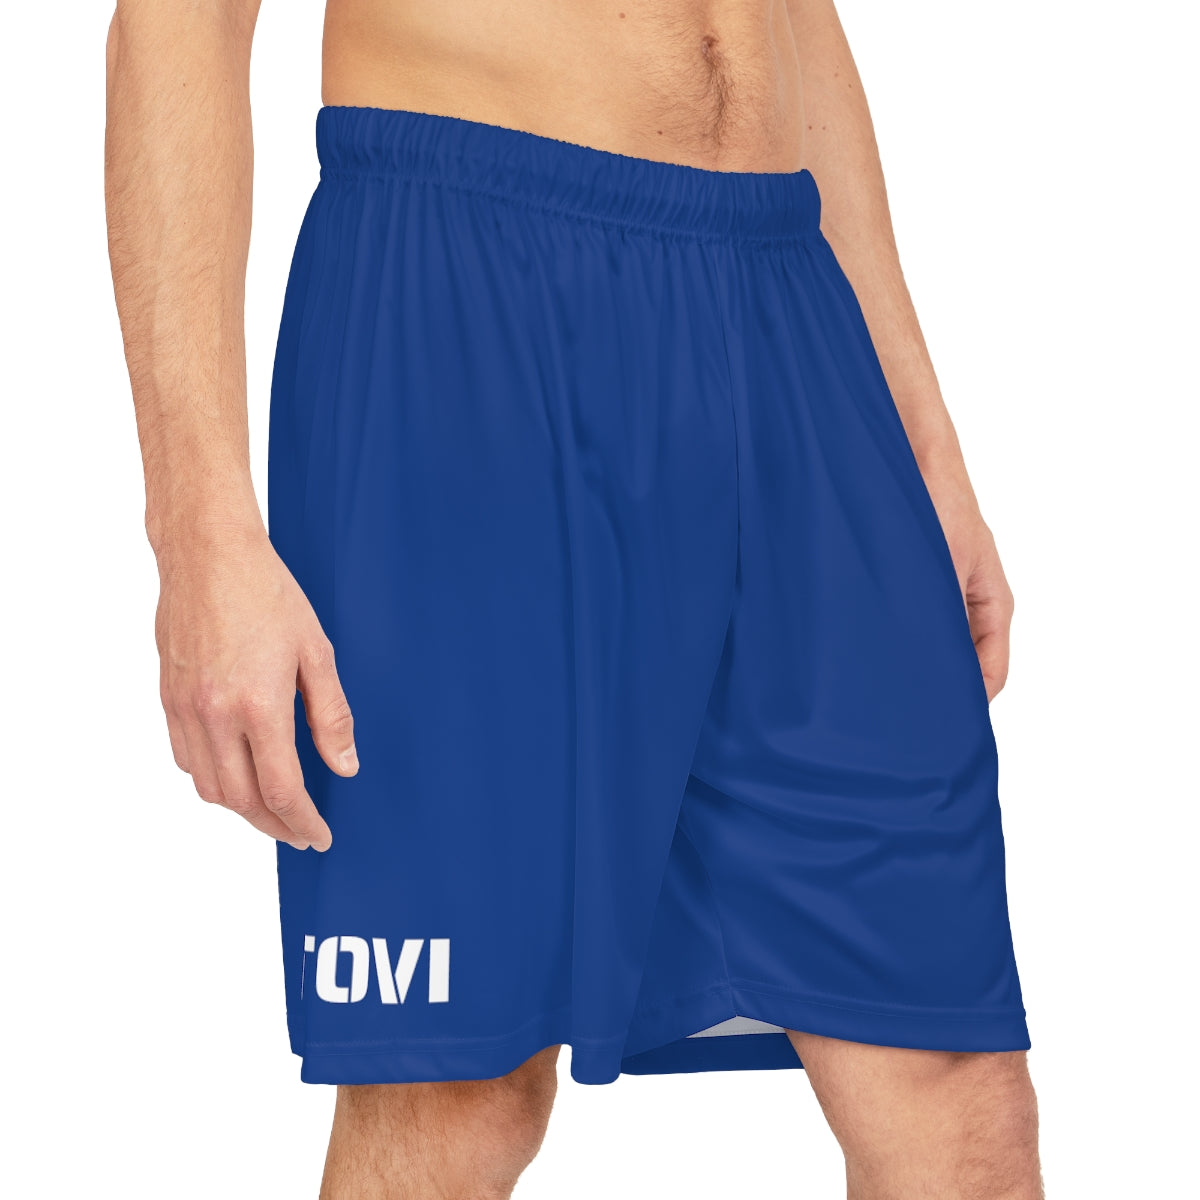 Odor-resistant Basketball Shorts - Blue Natovi Active